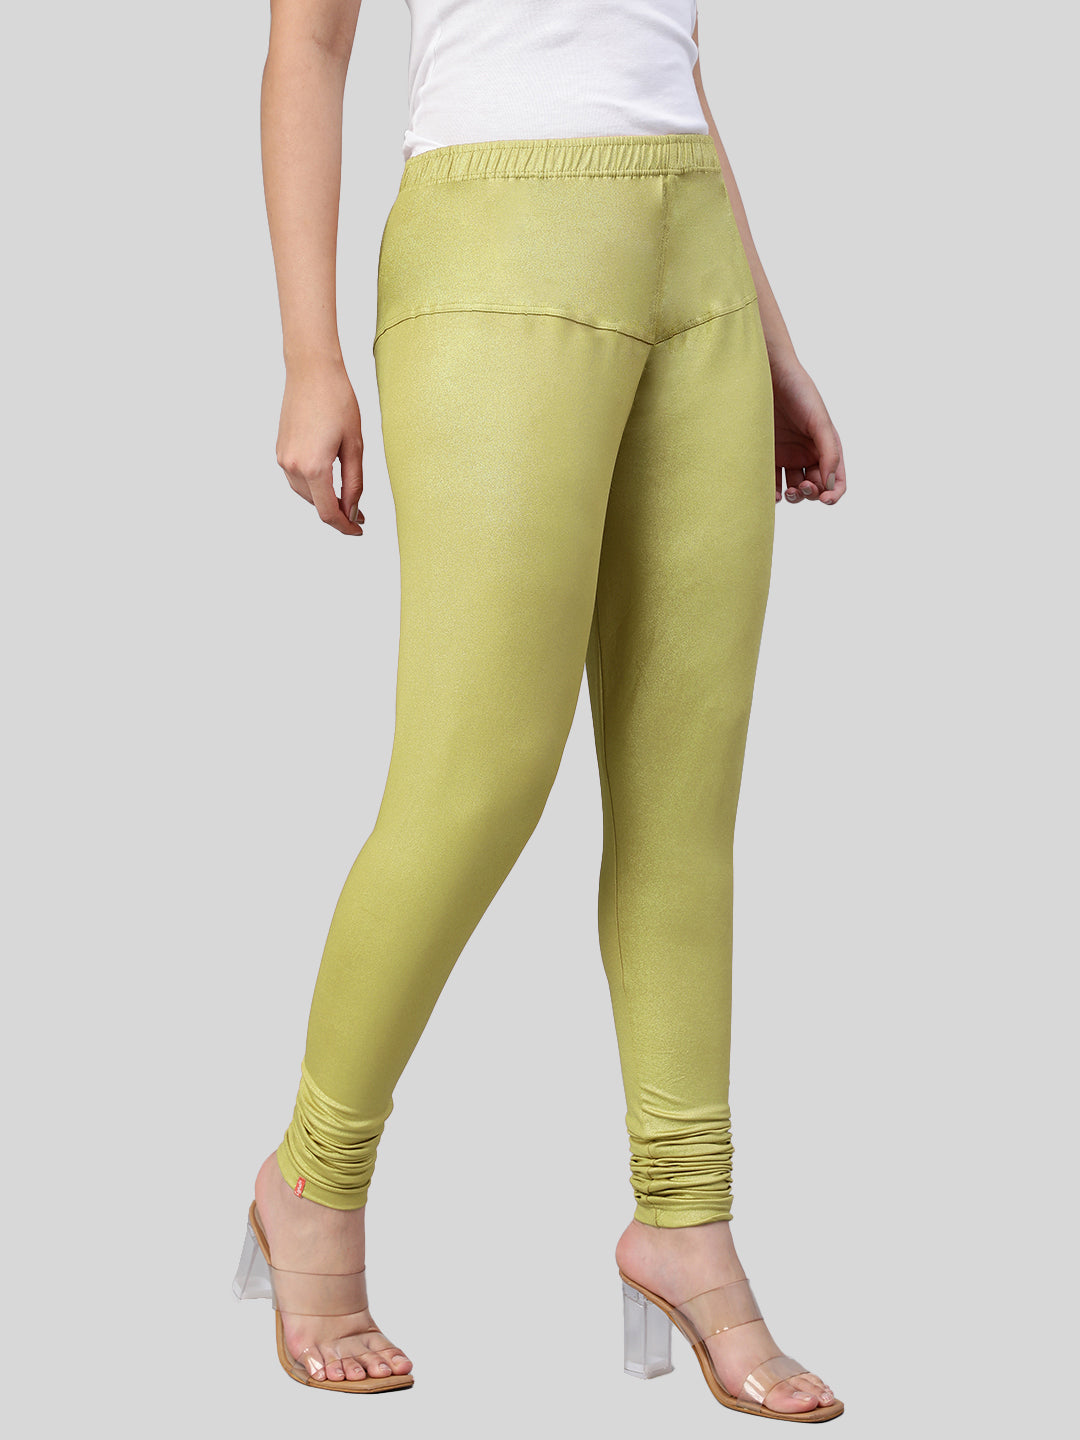 Buy Yellow Leggings for Women by W Online | Ajio.com